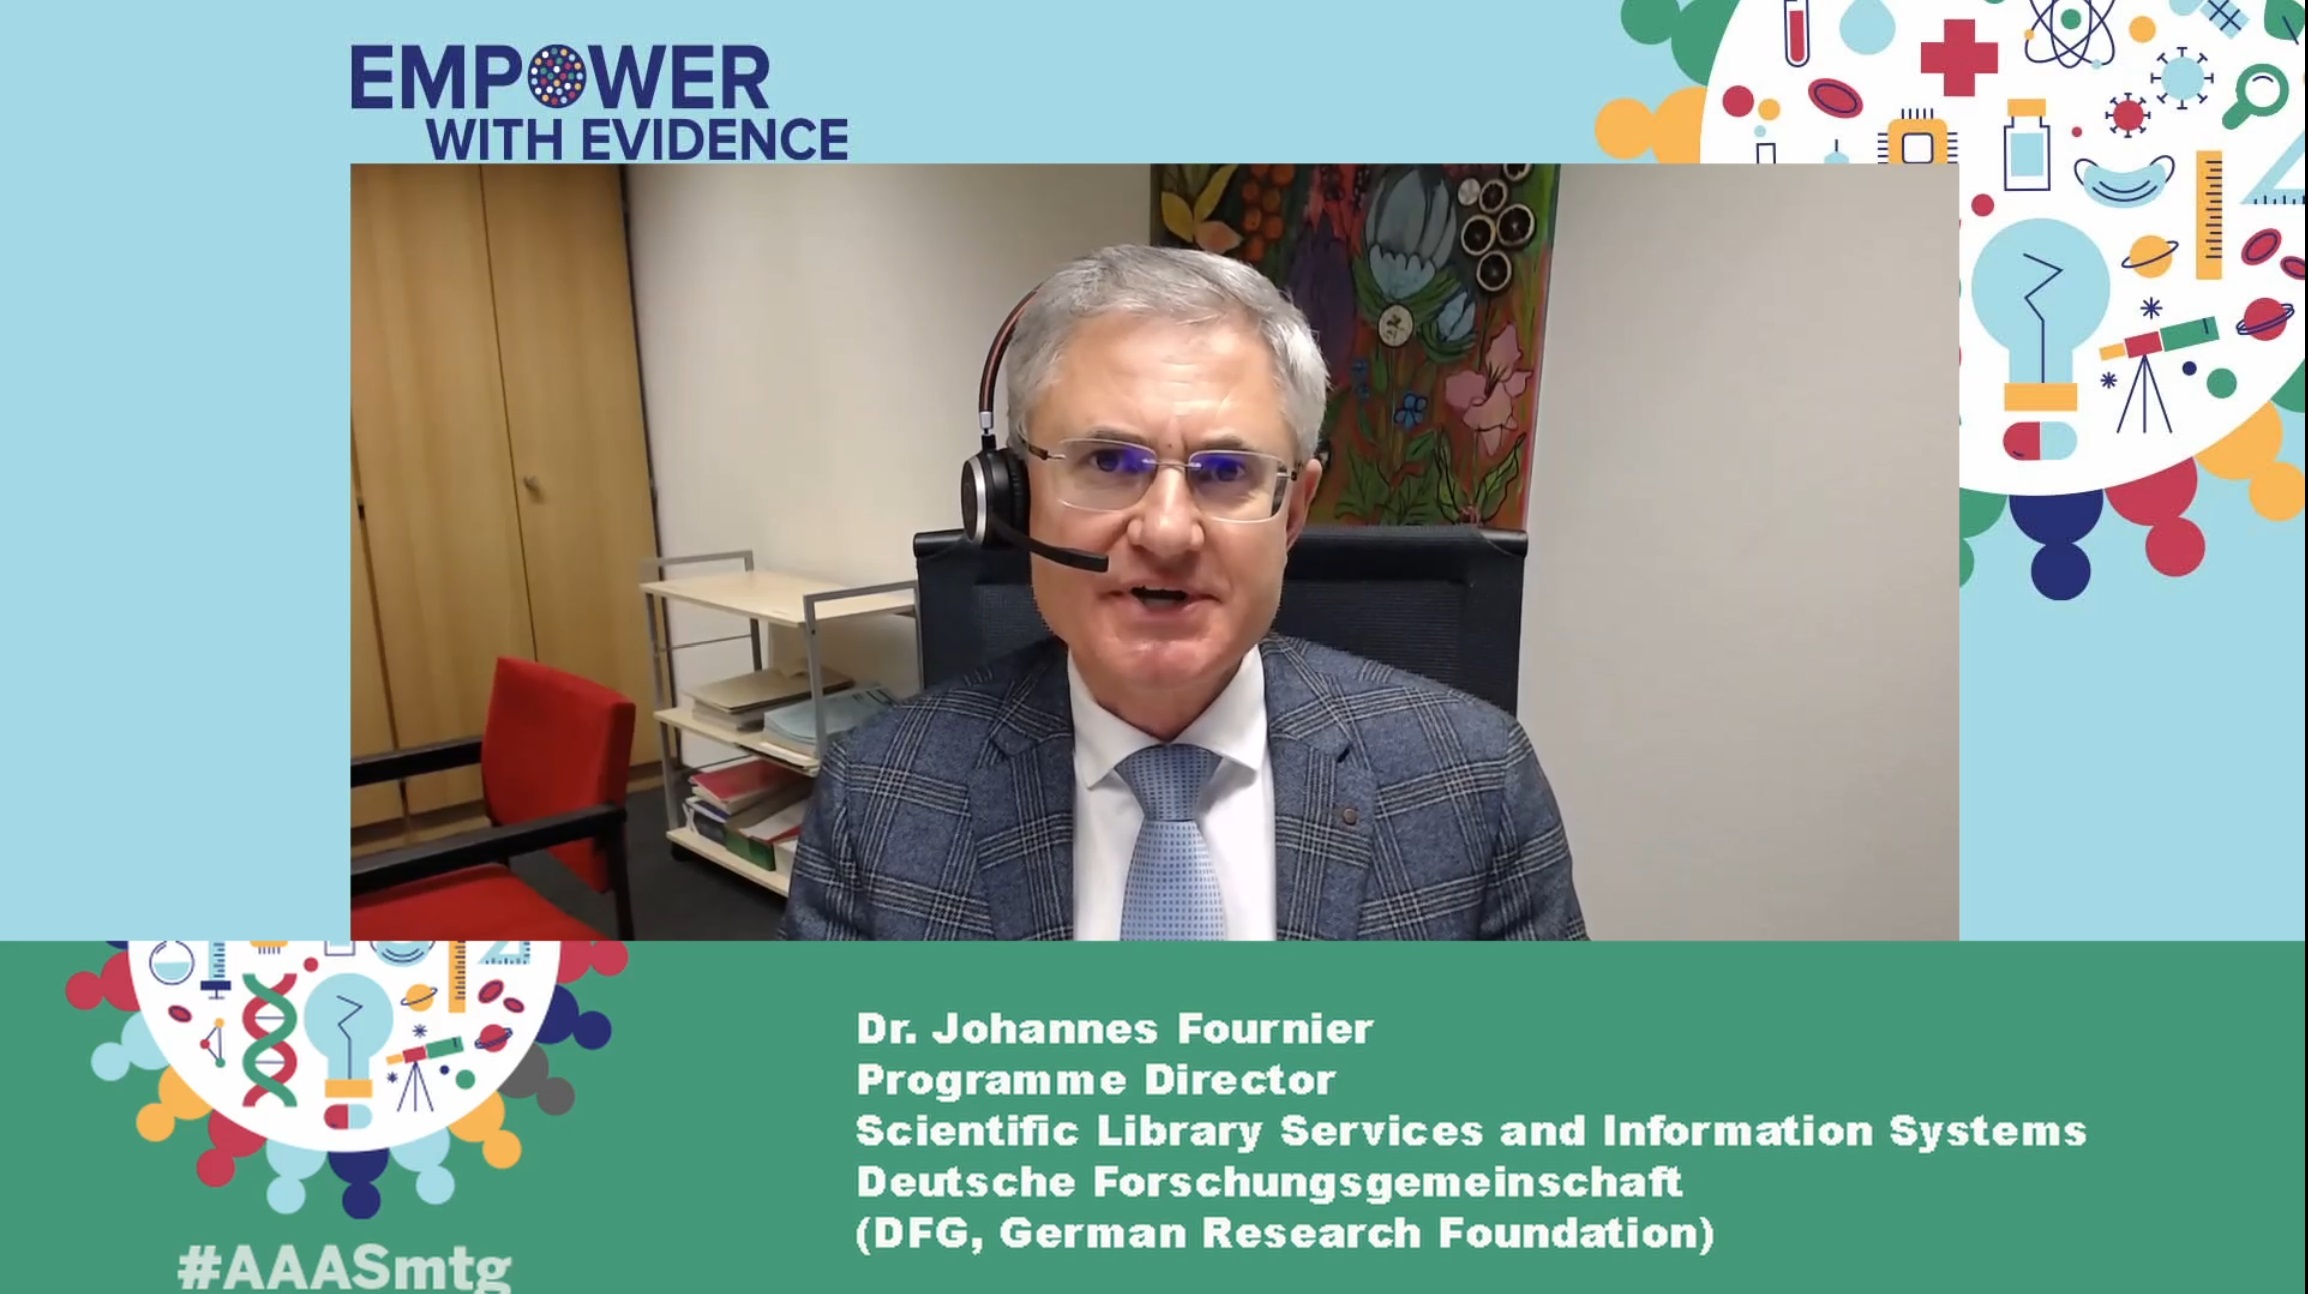 Dr. Johannes Fournier